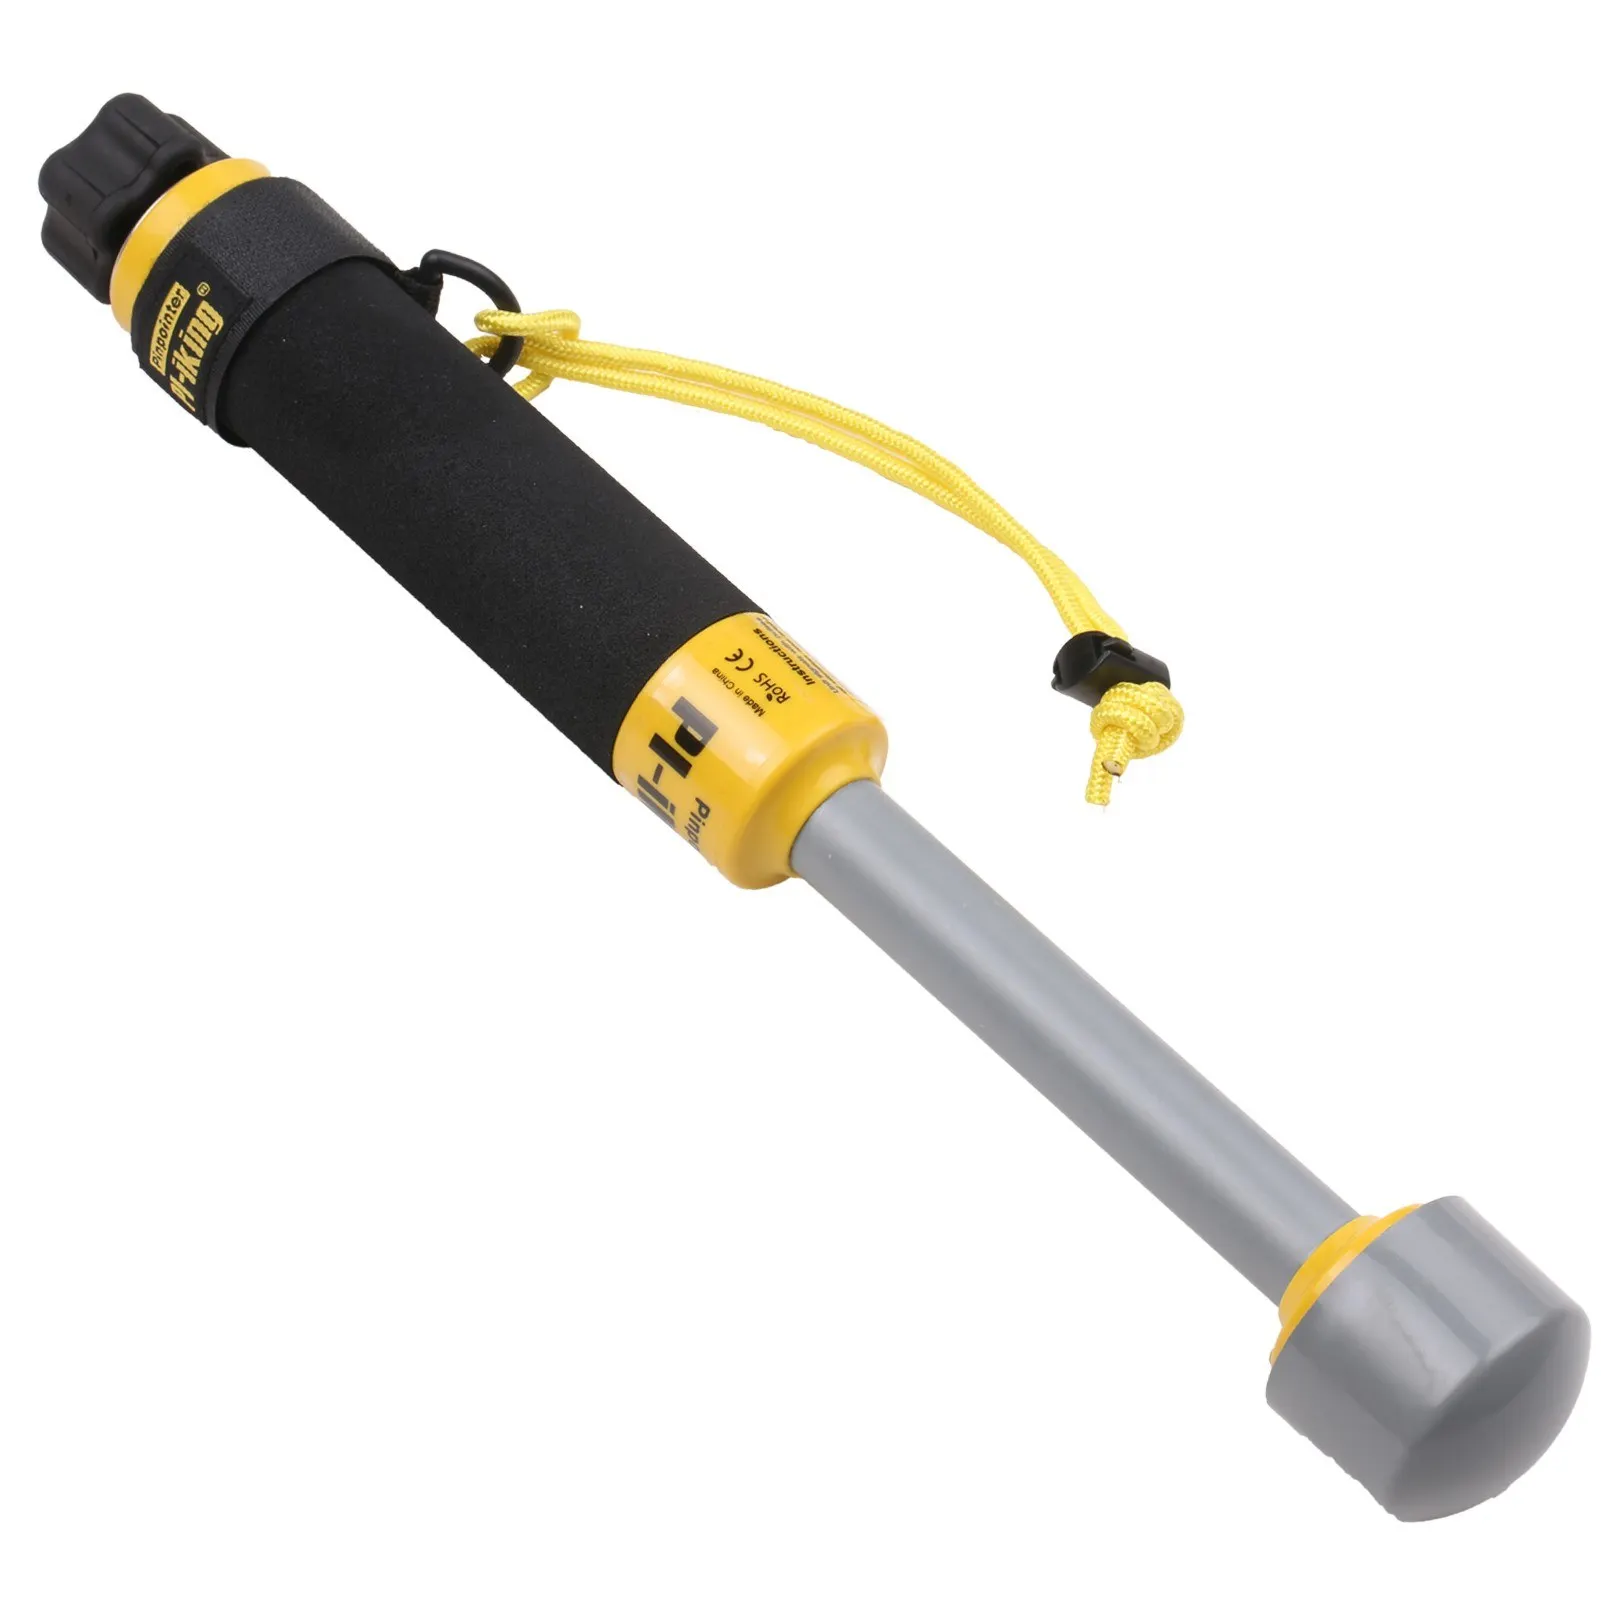 Wedigout Underwater Fully Waterproof Pin Pointer Metal Detector 100Feet Waterproof Handheld Pulse Induction Metal Finder with Pin Point Feature LED Indicator 